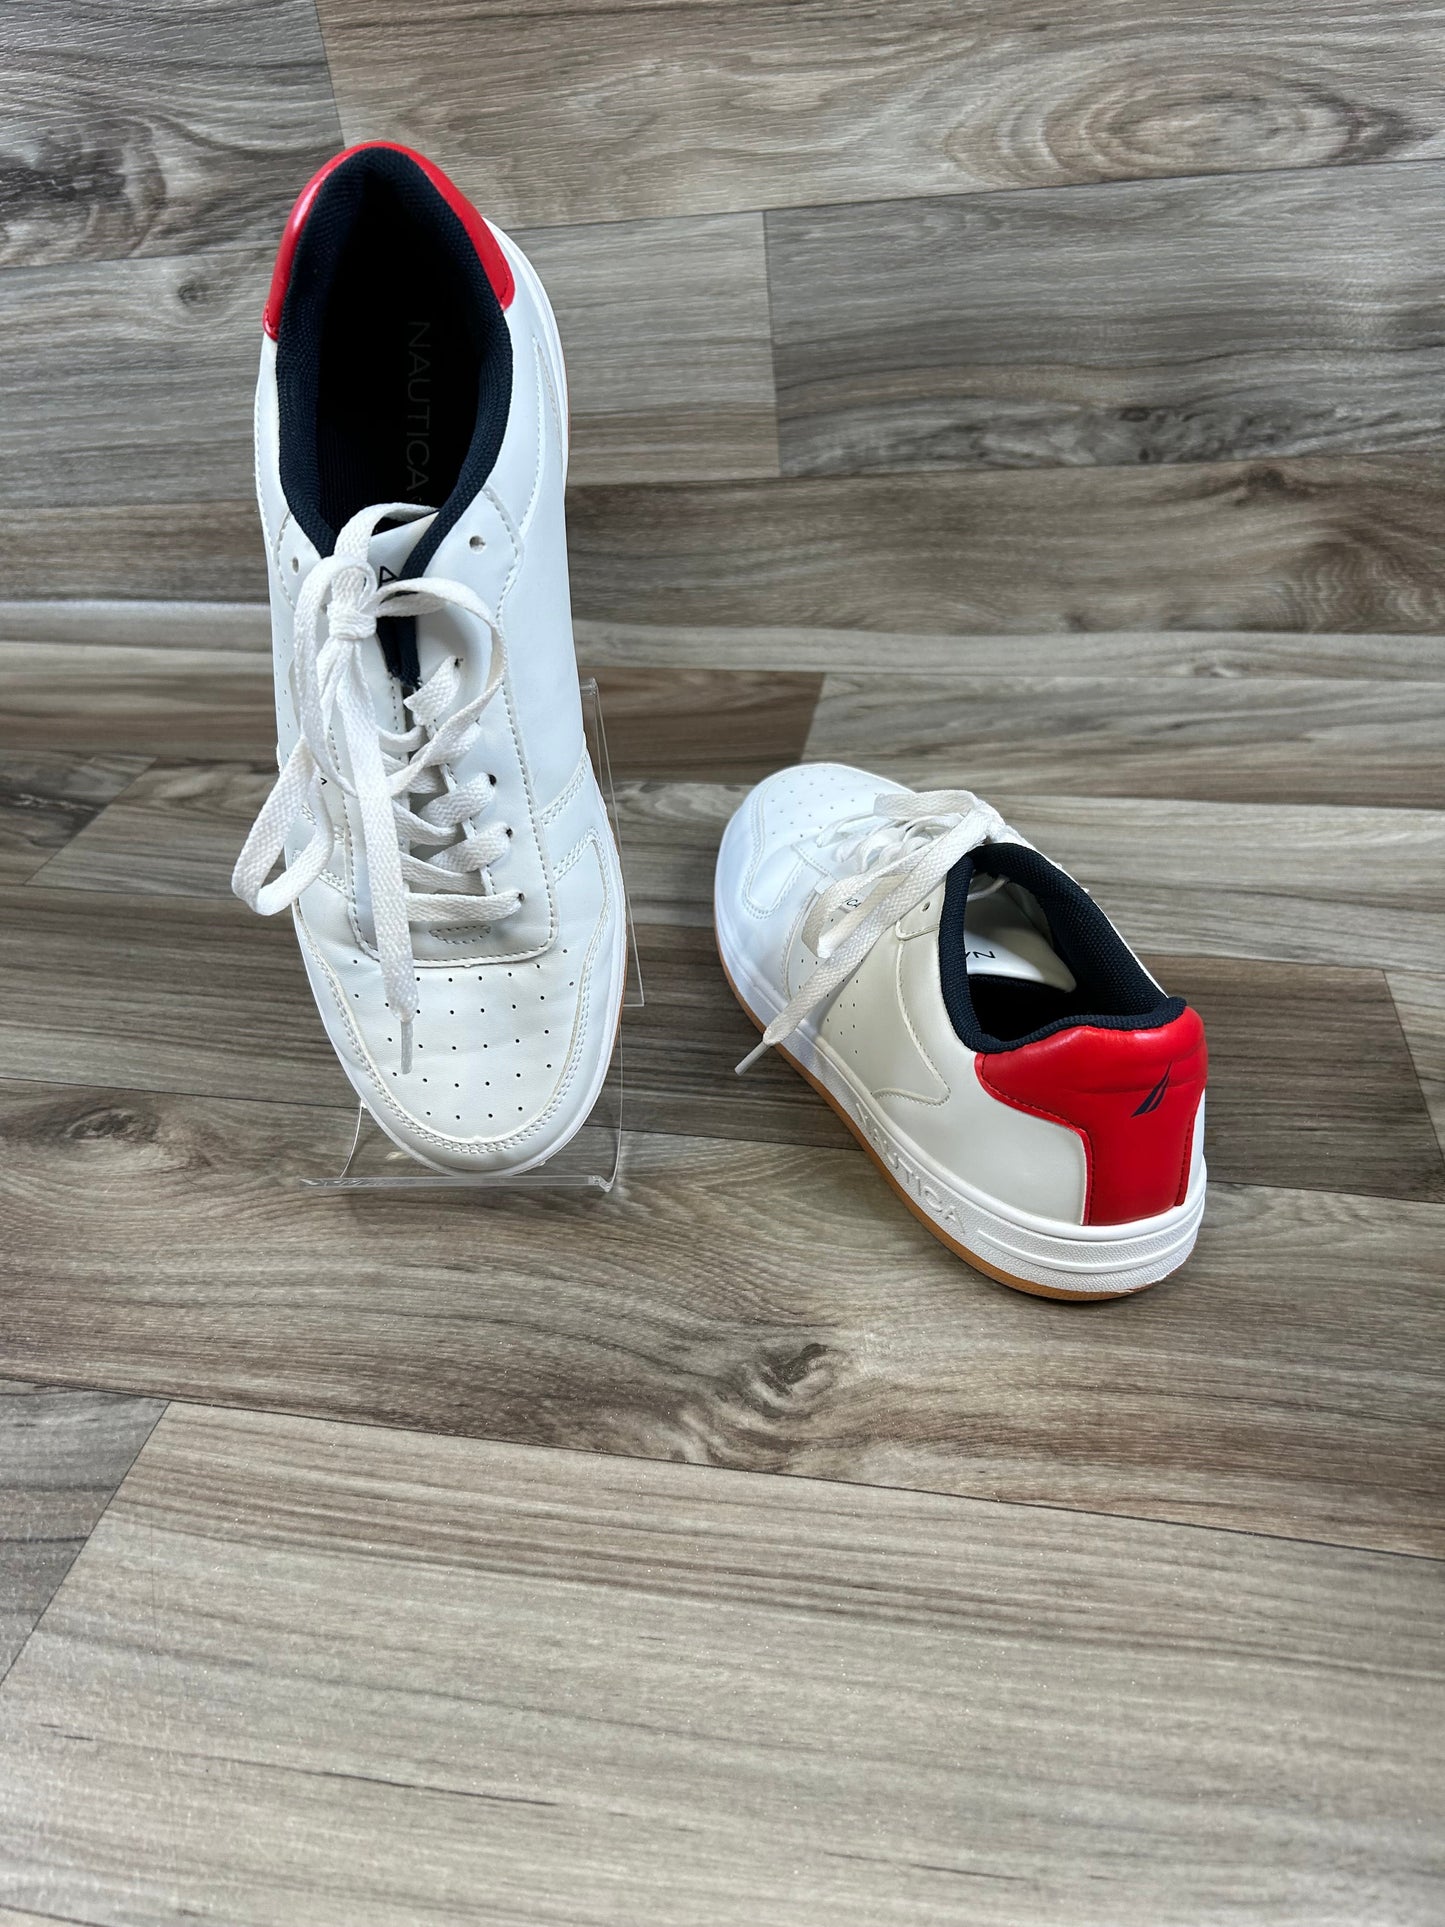 White Shoes Sneakers Nautica, Size 7